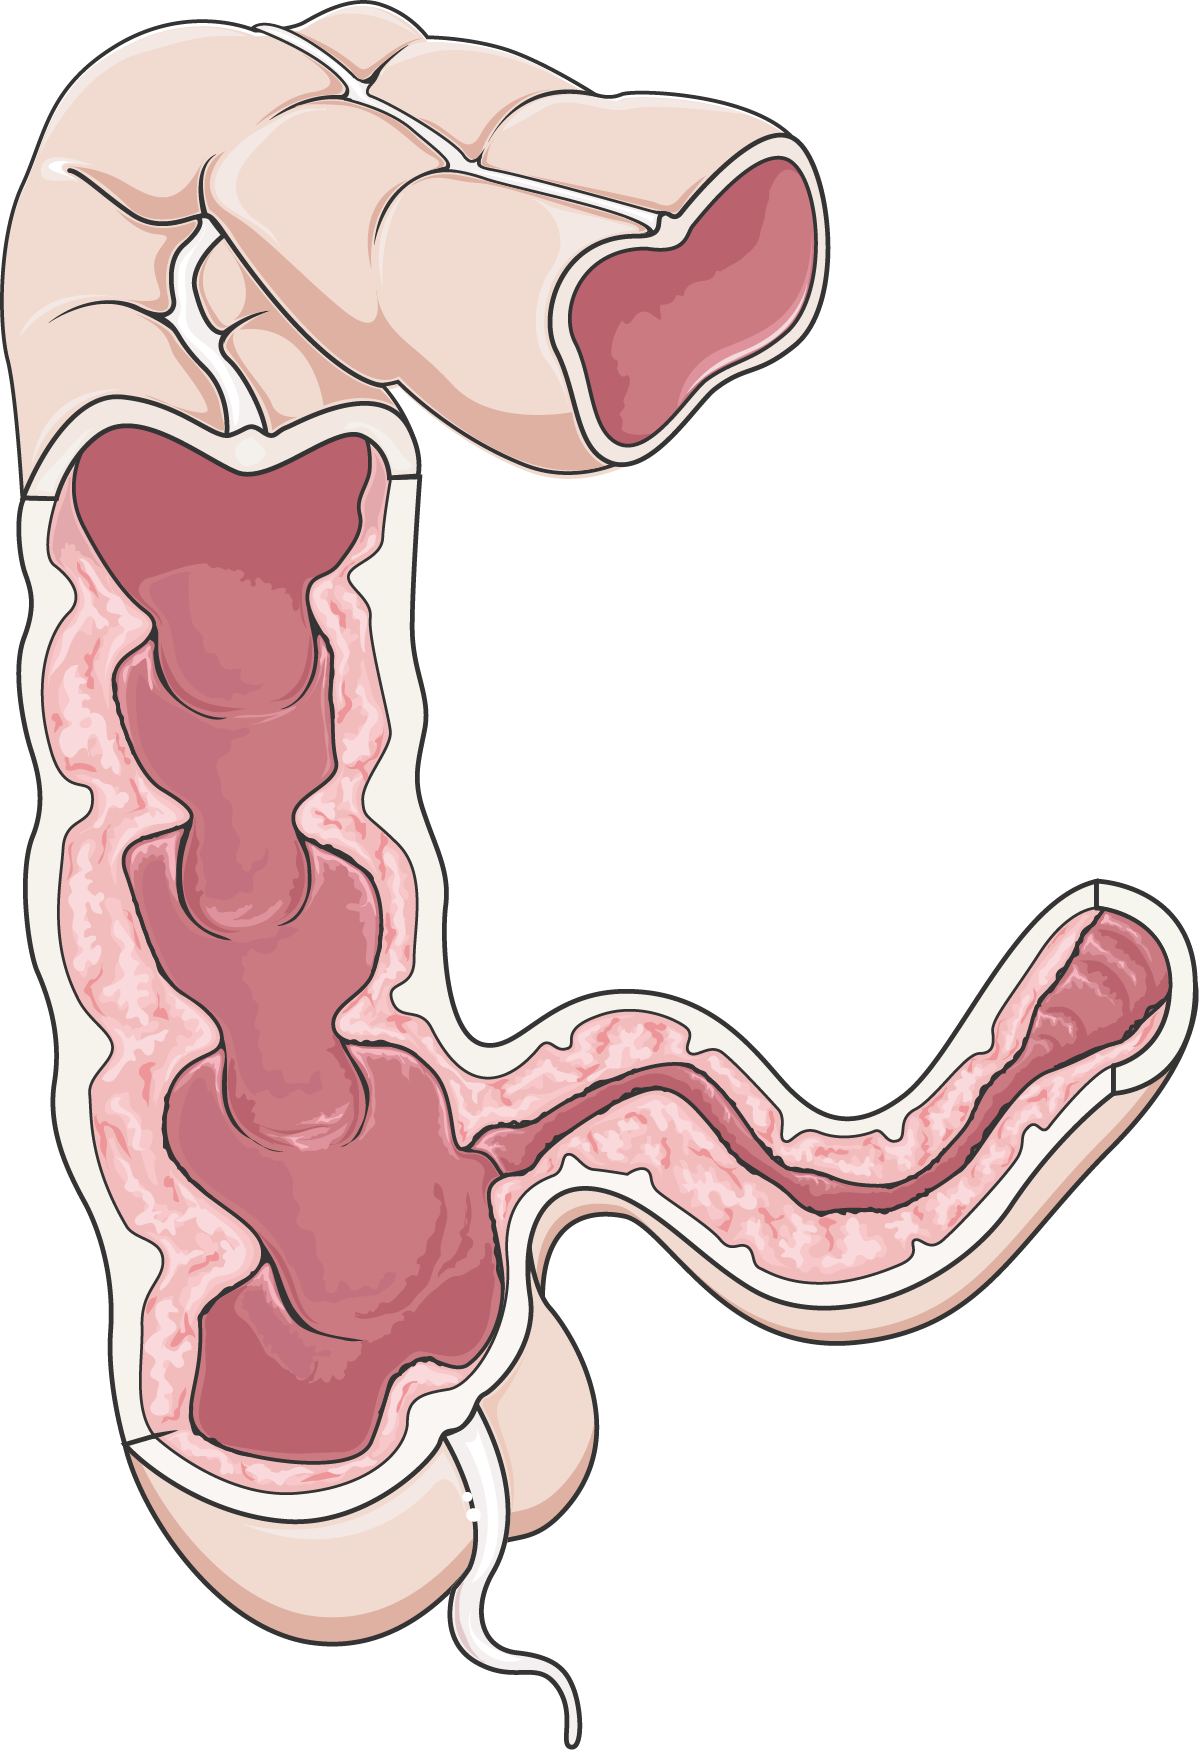 Colon (Crohn's disease).